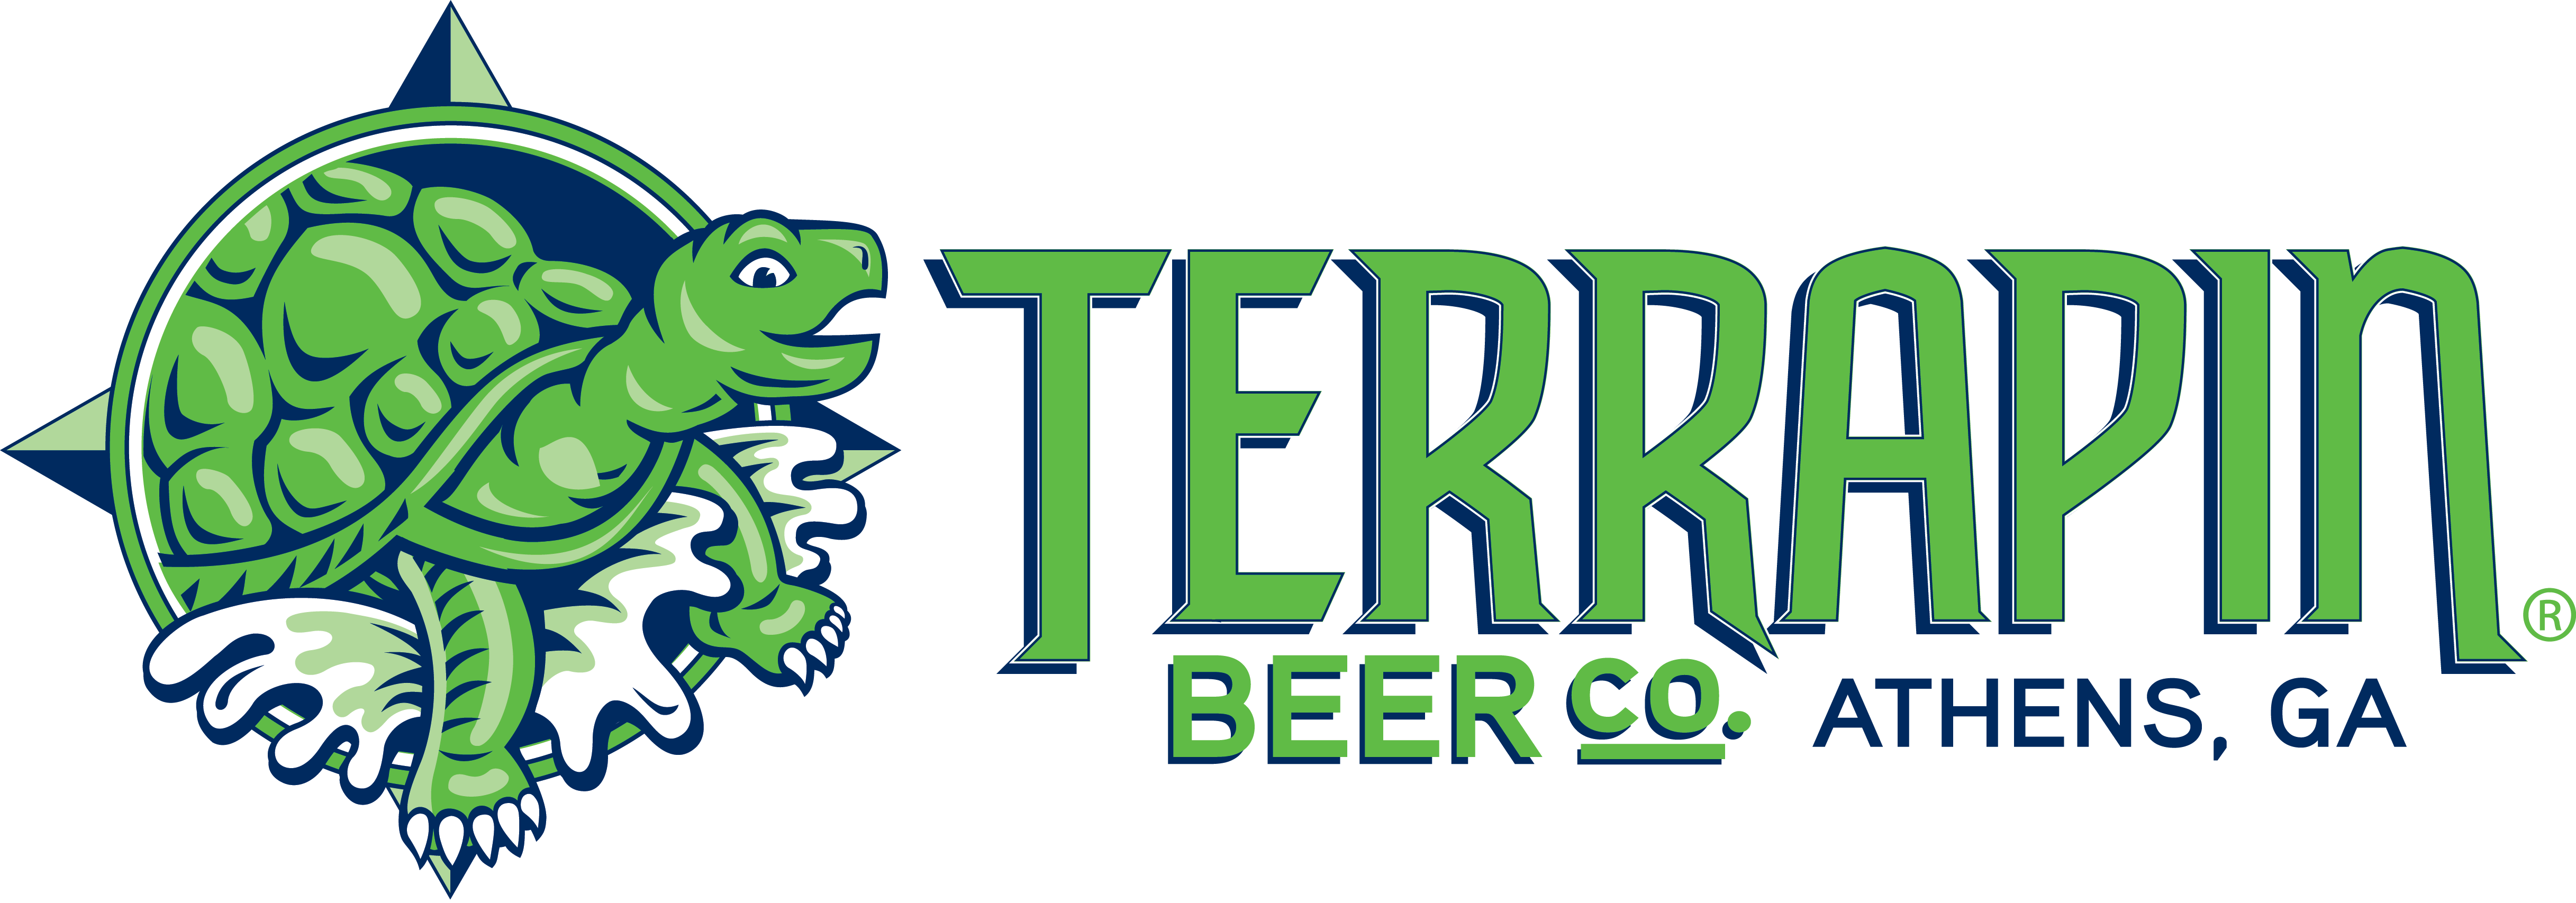 Georgia Beer Logo - JOB ALERT: Terrapin Beer Co. Hiring RIGHT NOW. Georgia Public